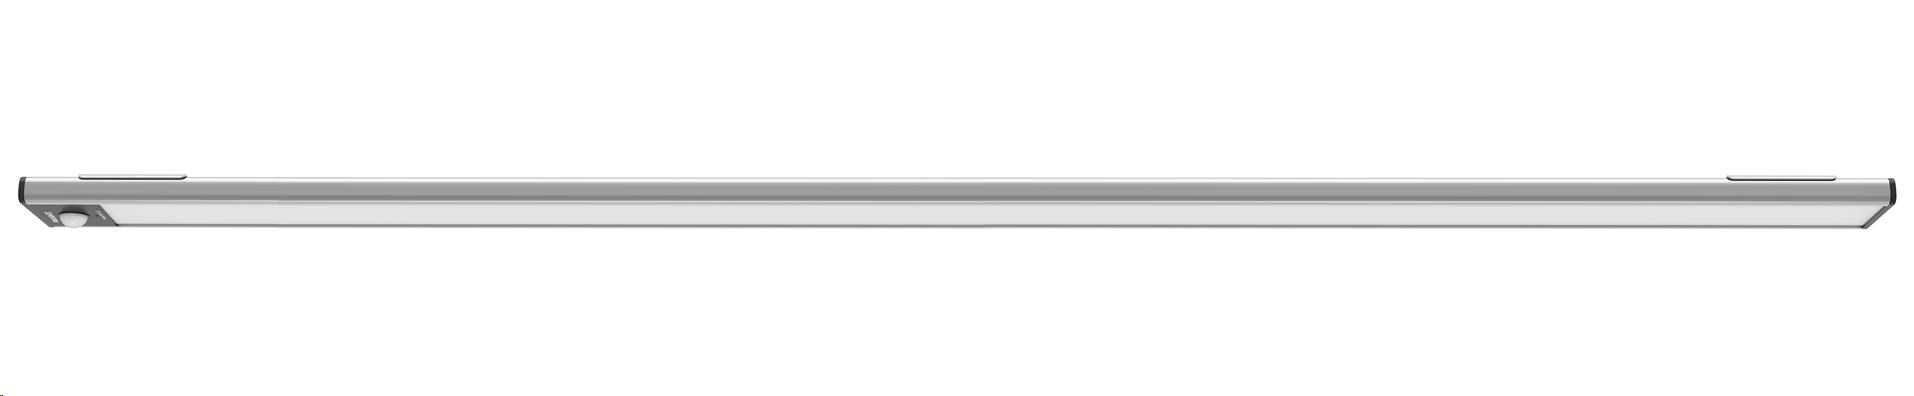 Yeelight Motion Sensor Closet Light A60-silver,   2700K (teplá bílá)4 